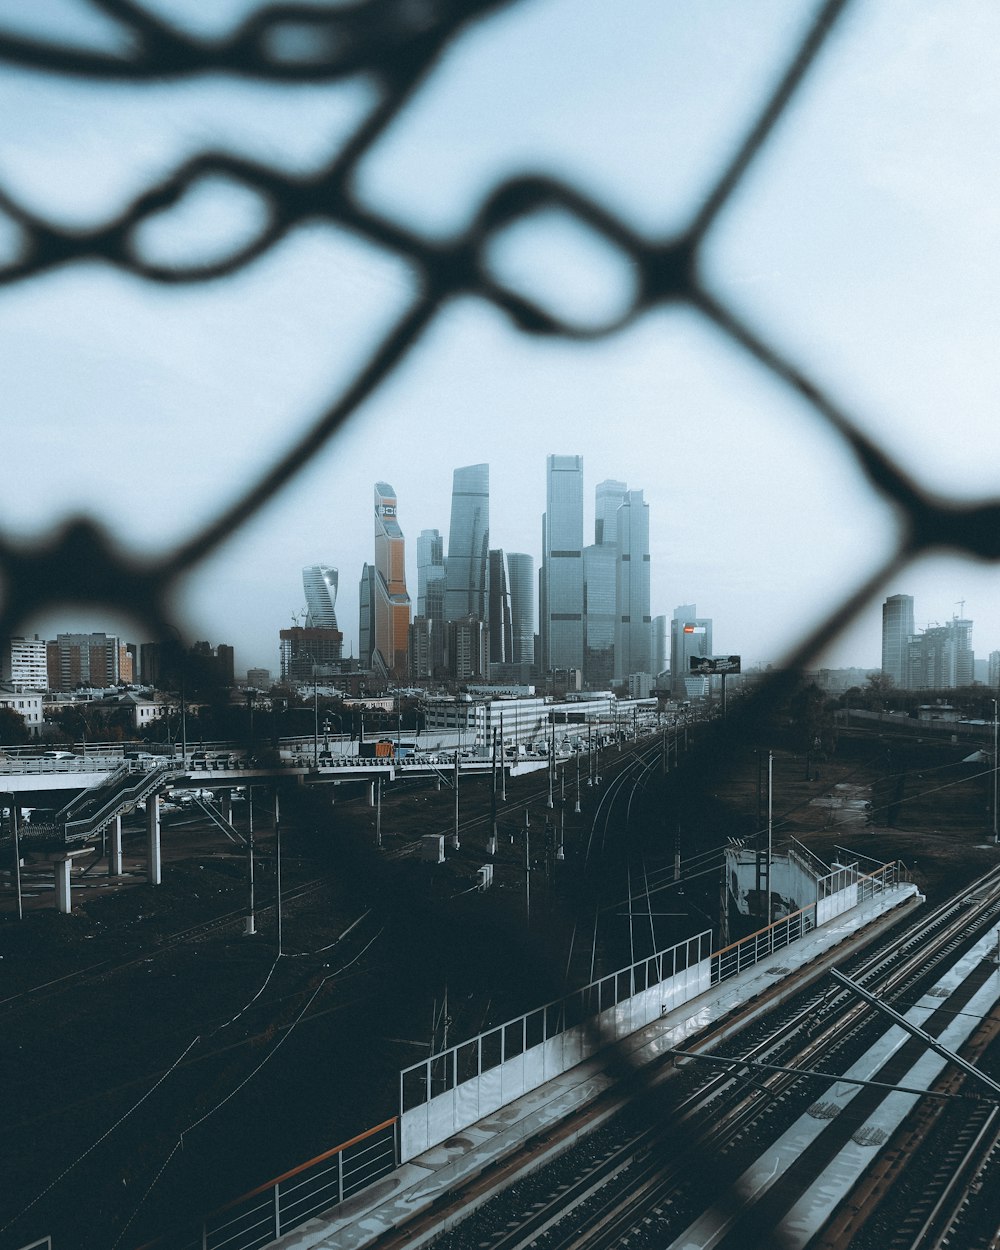 a city skyline seen through a train window